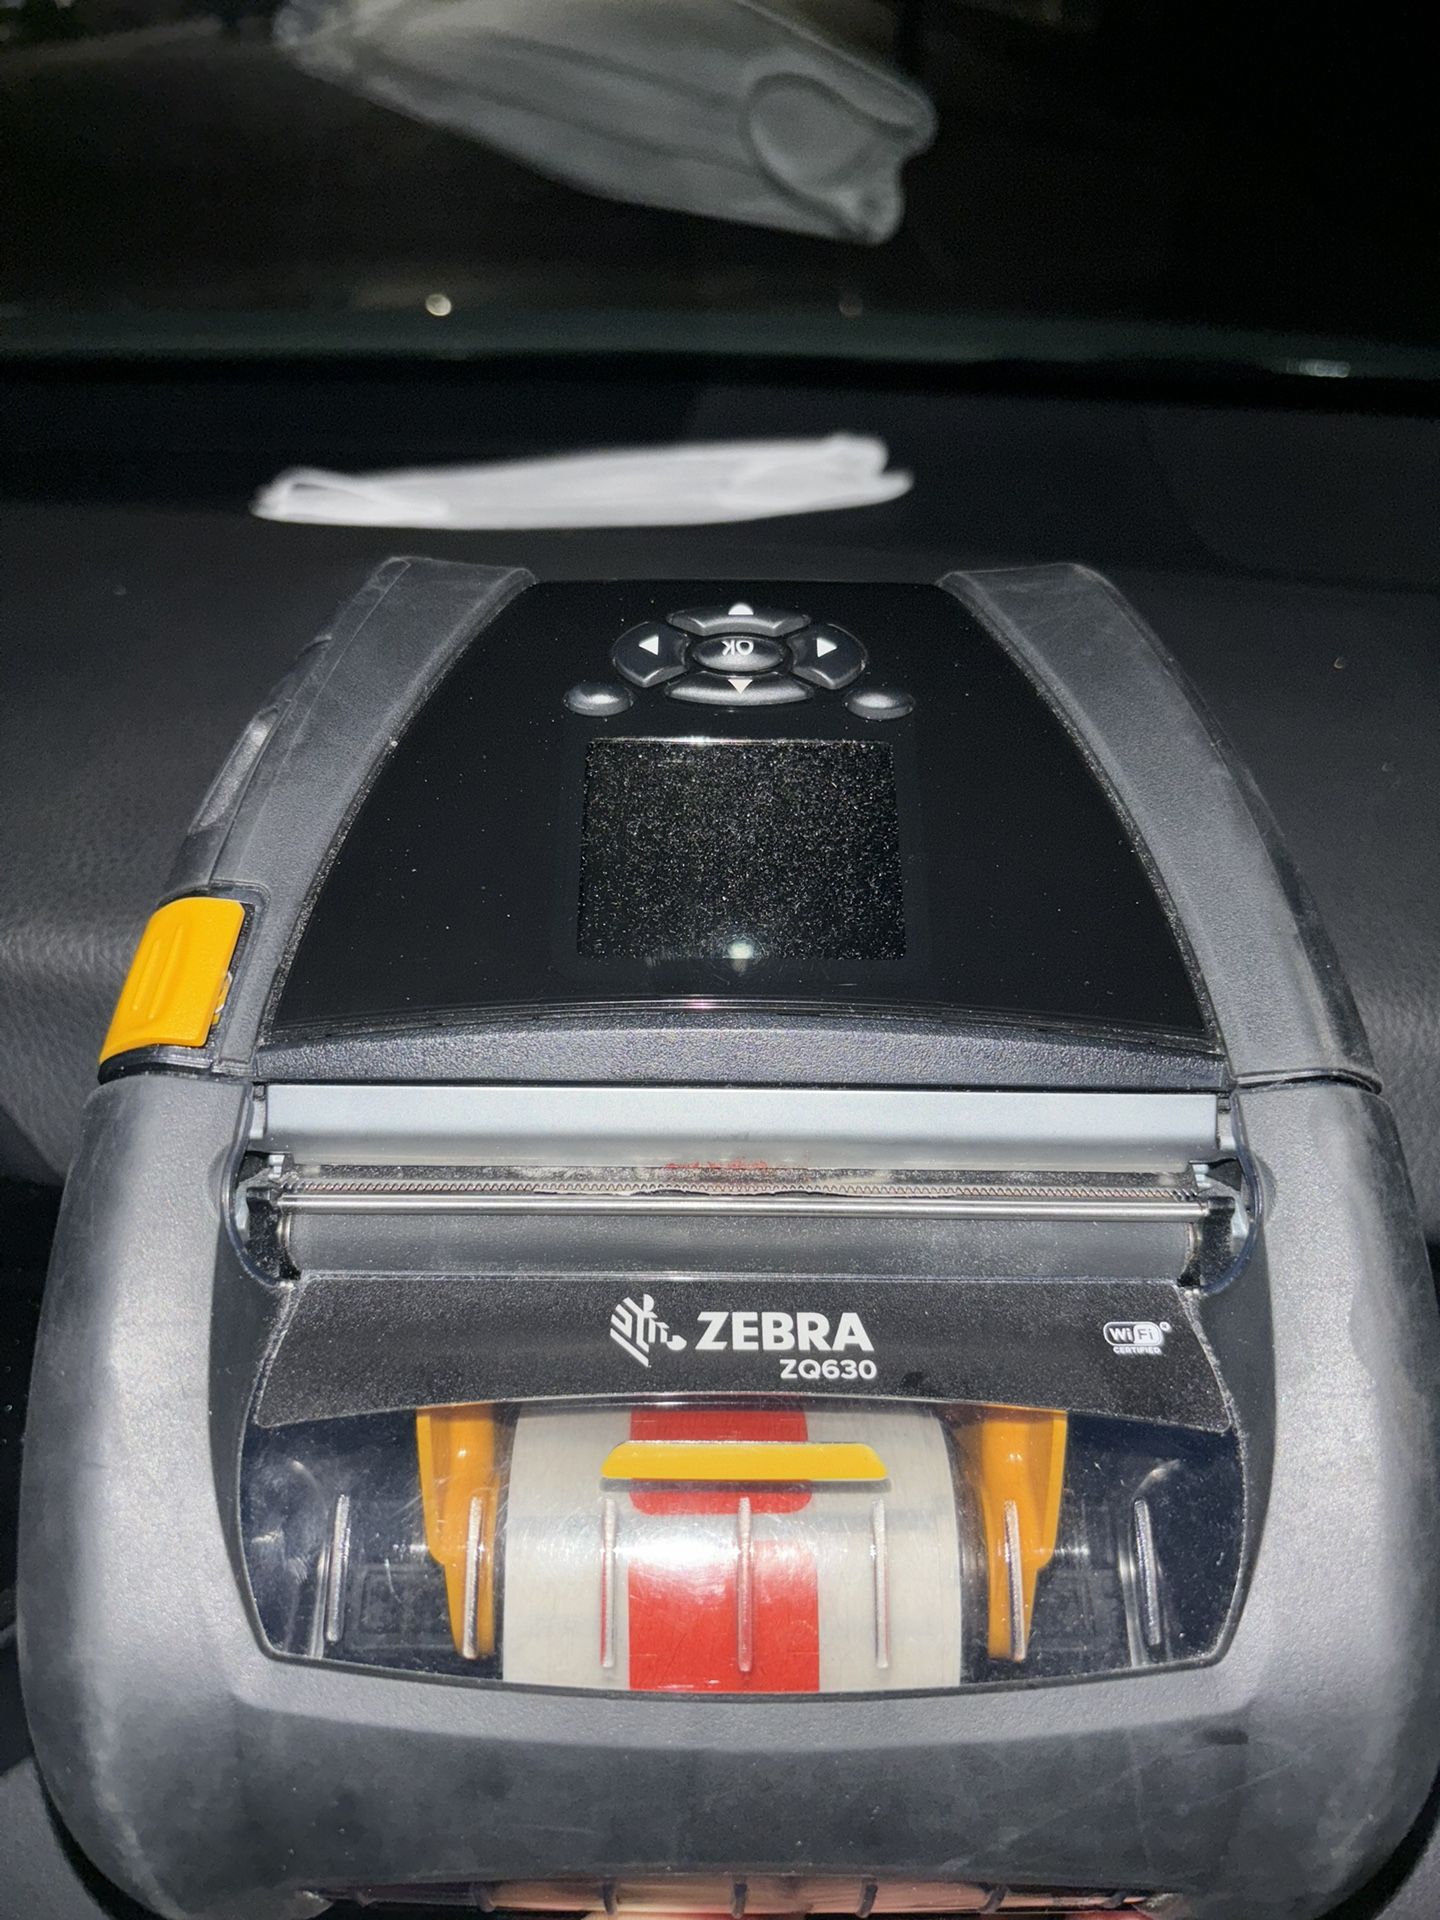 Zebra Zq630 Plus Direct Thermal Printer